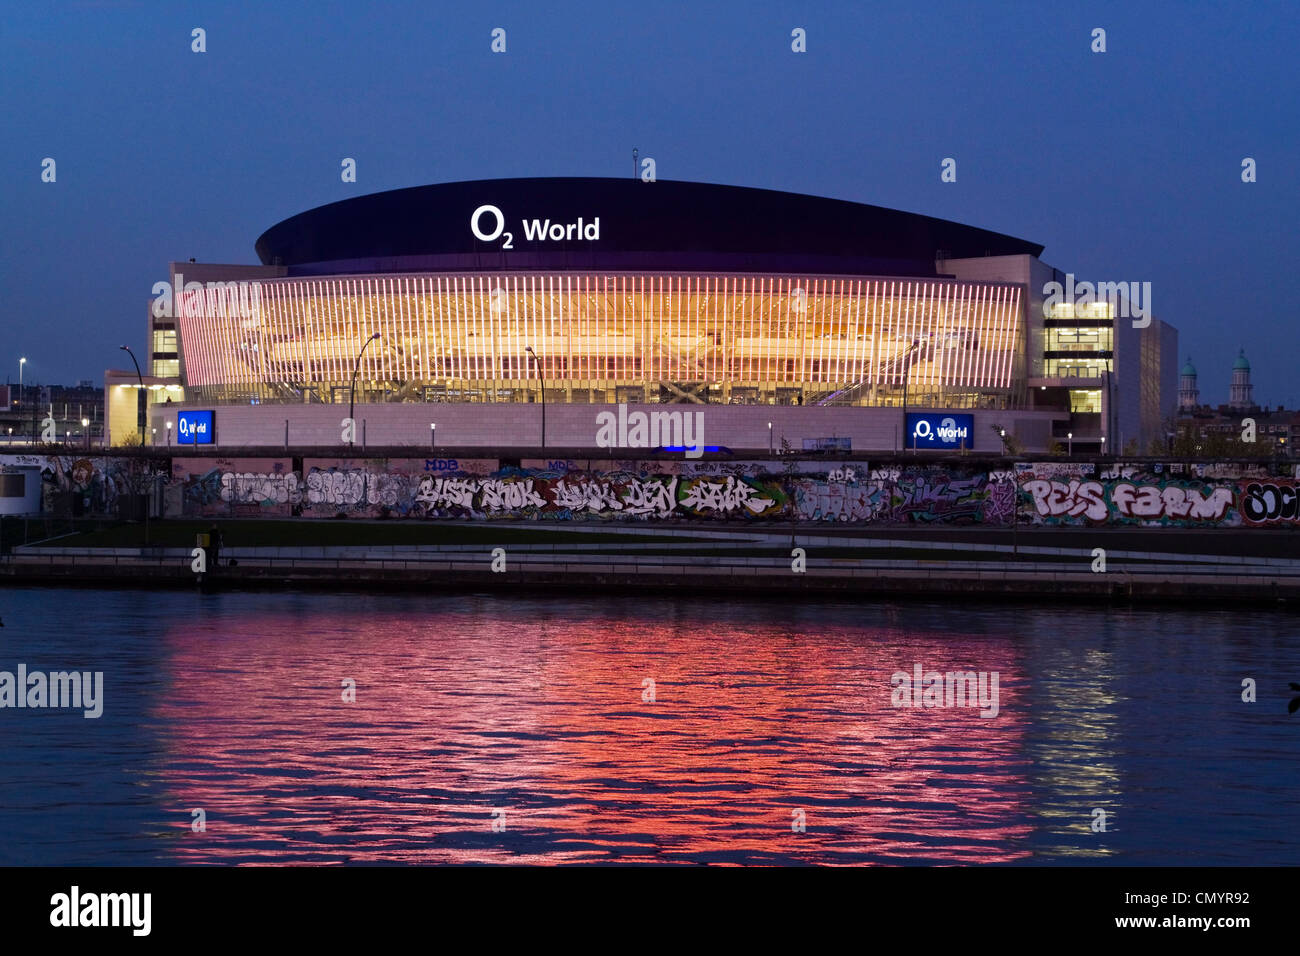 O2 World Arena, Veranstaltungssaal, Fluss Spree, Berlin, Deutschland Stockfoto